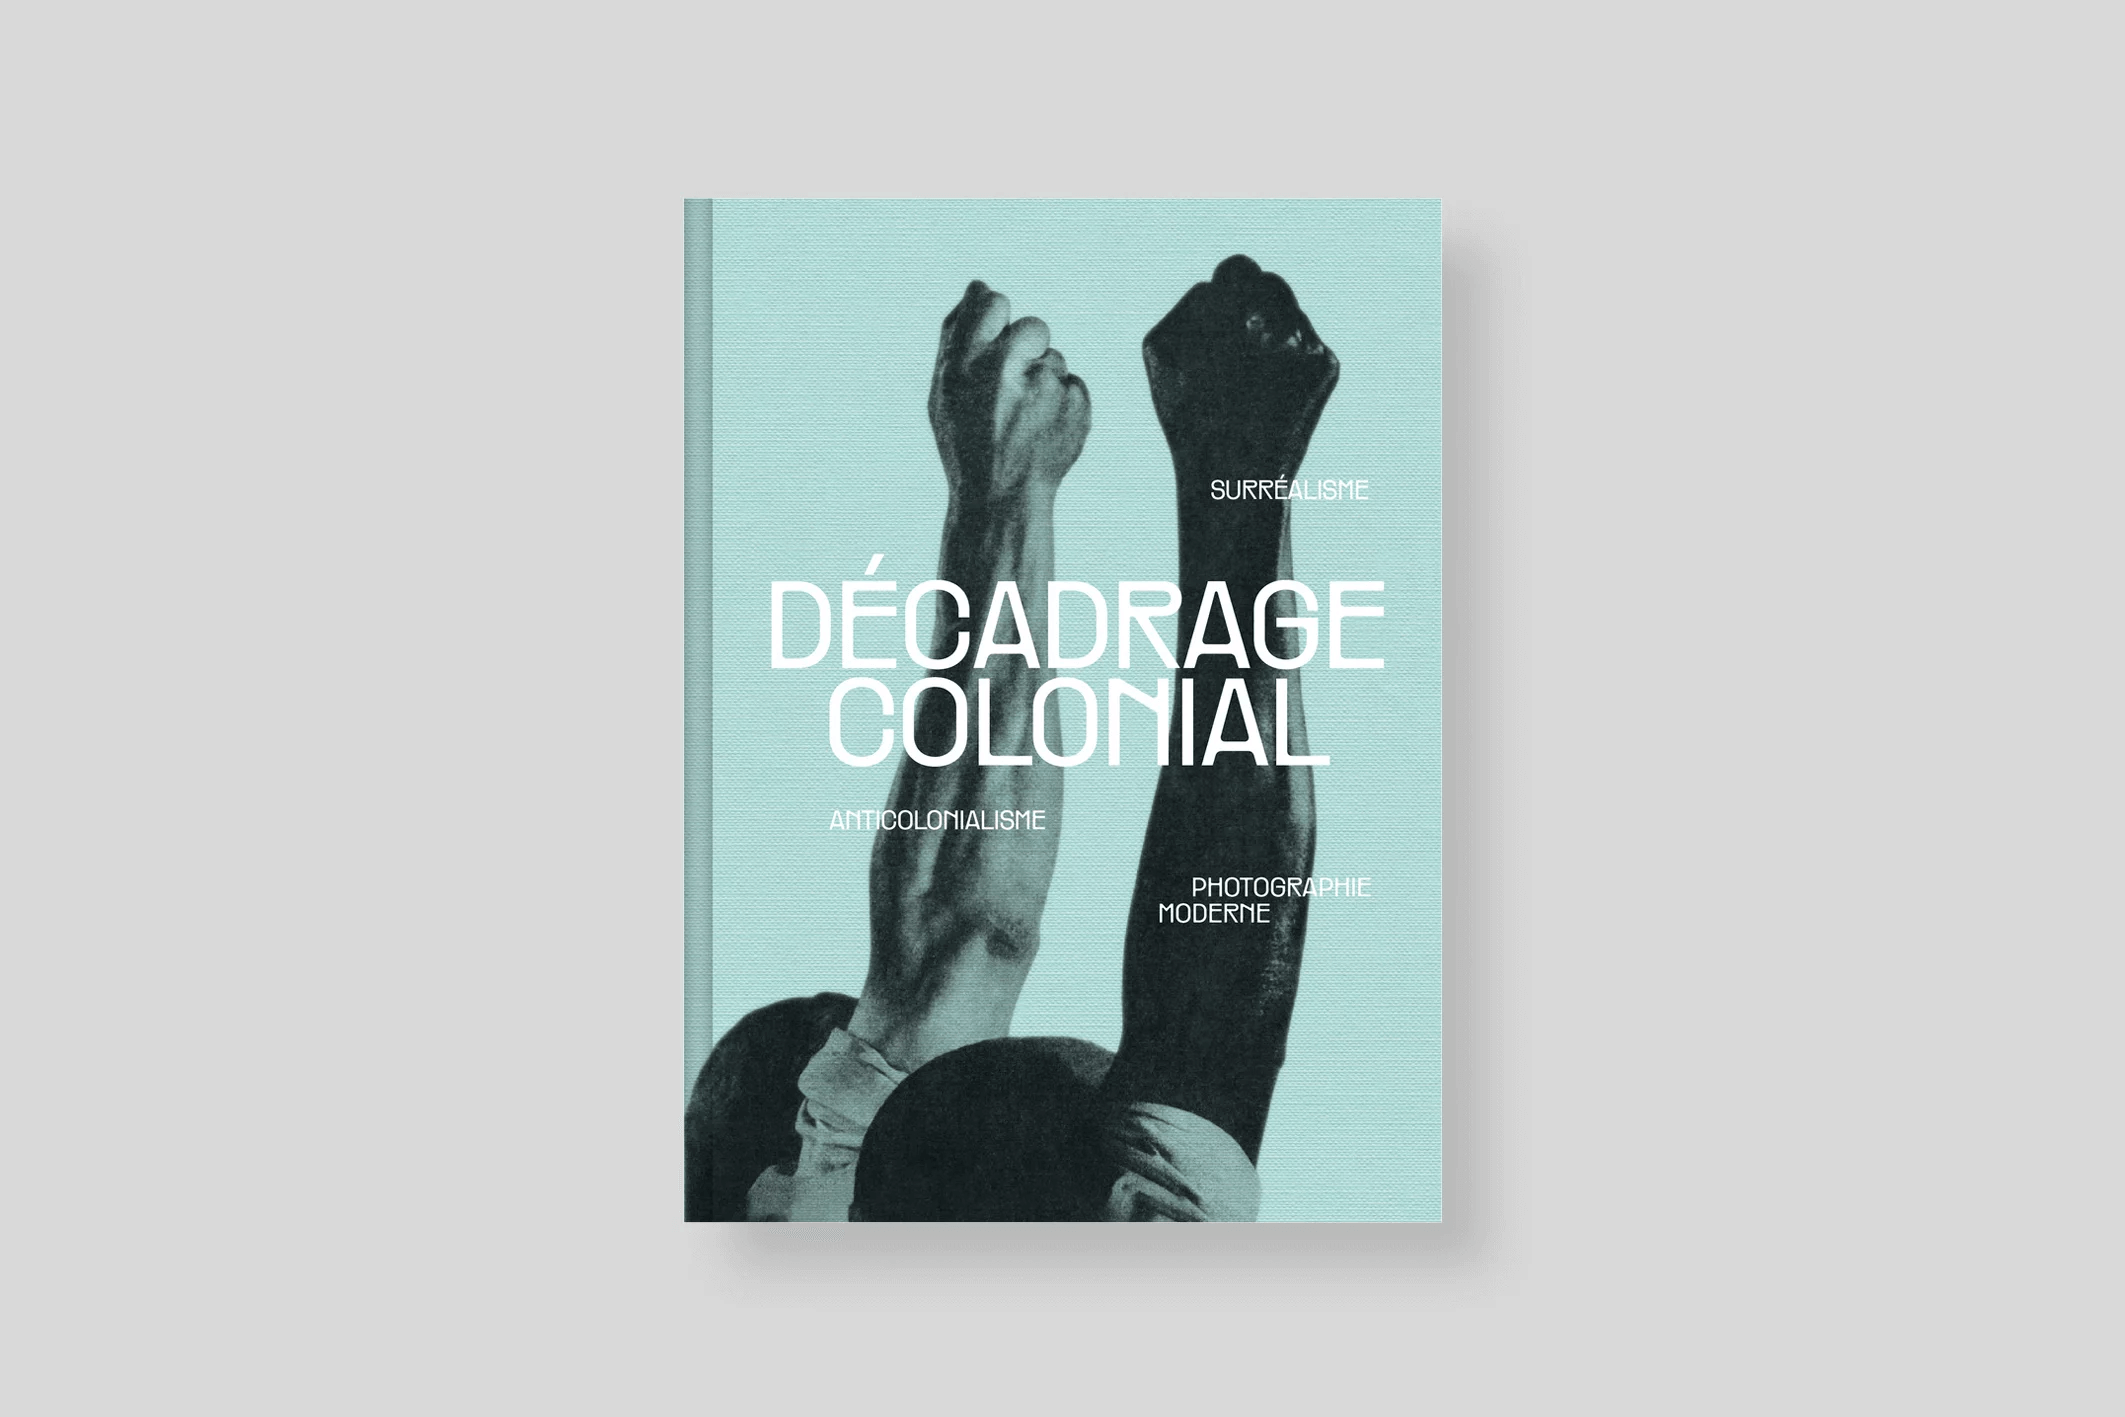 decadrage-colonial-amao-editions-textuel-cover